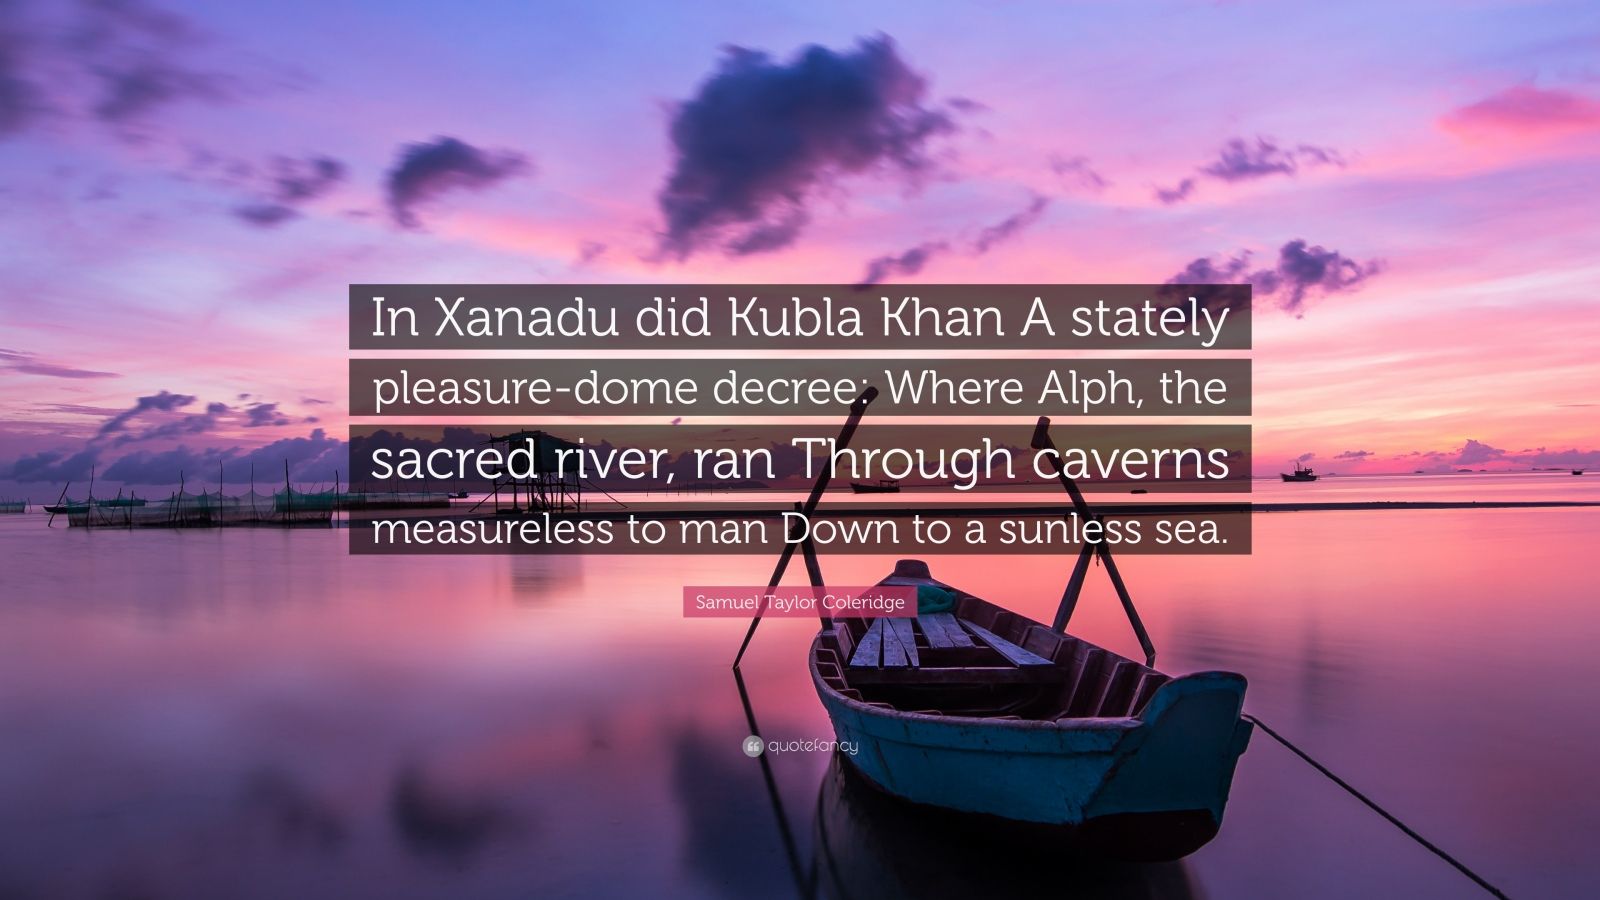 Samuel Taylor Coleridge Quote: “In Xanadu did Kubla Khan A stately pleasure-dome ...1600 x 900